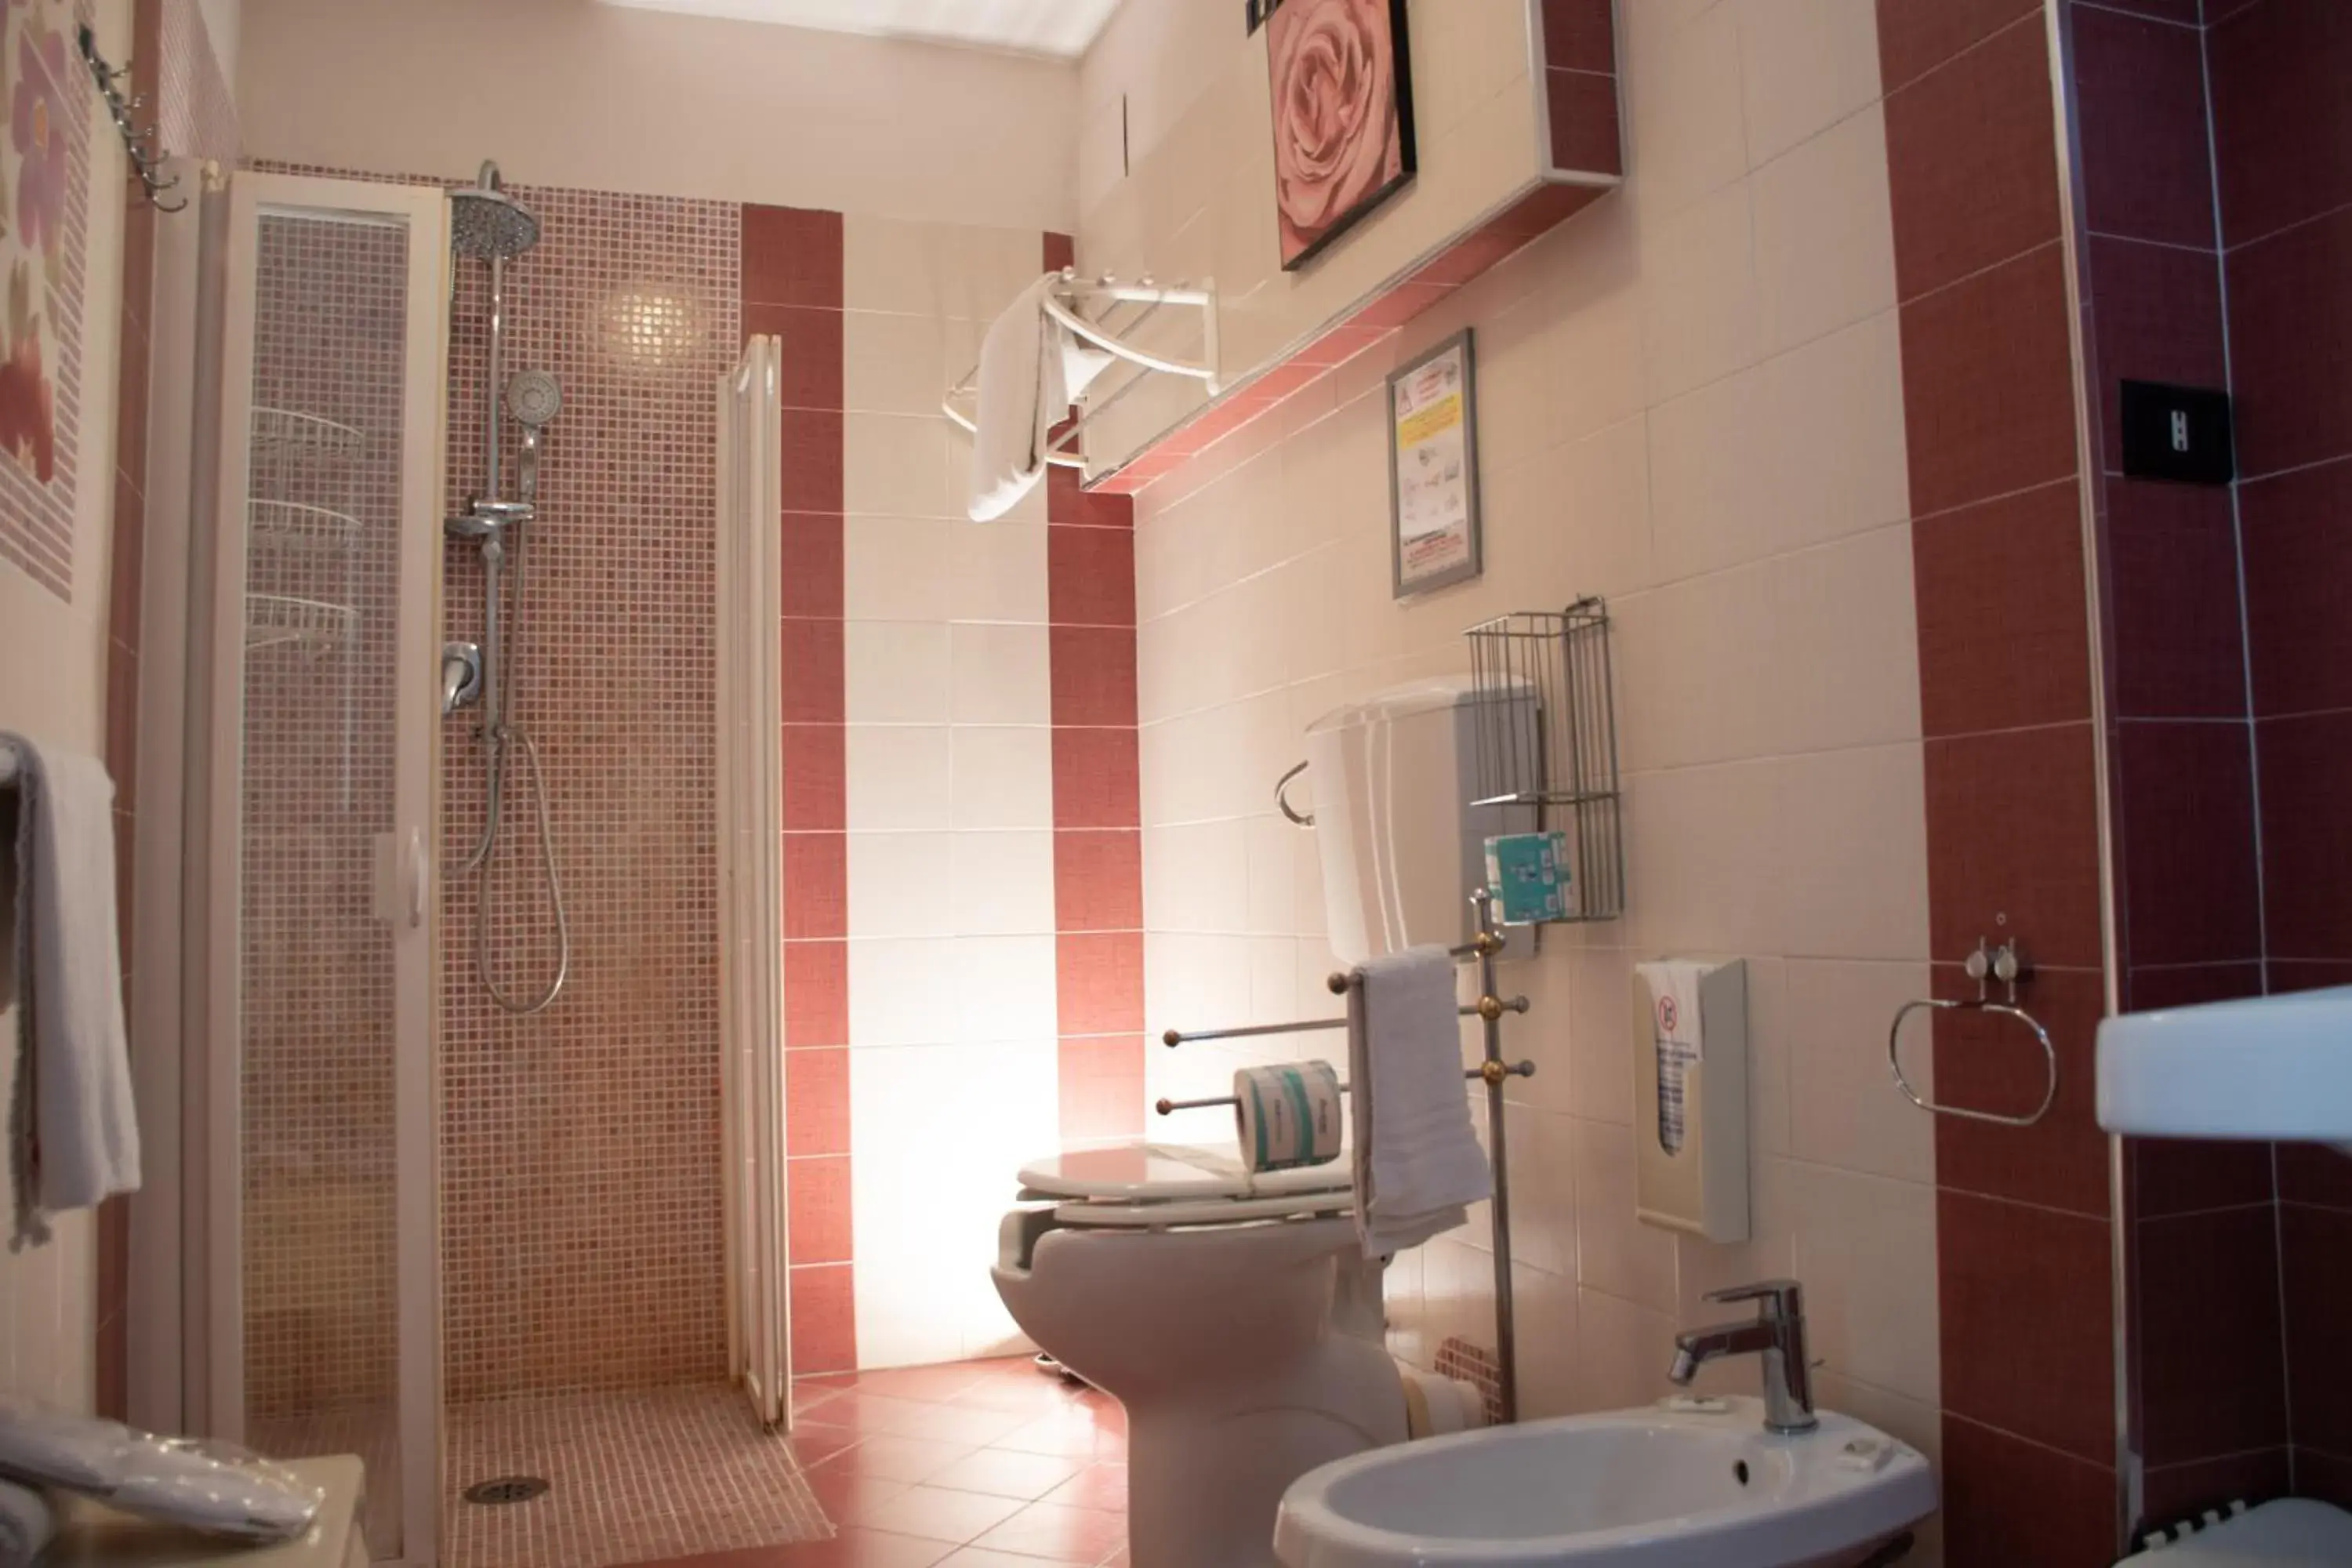 Bathroom in Hotel Maison Degas